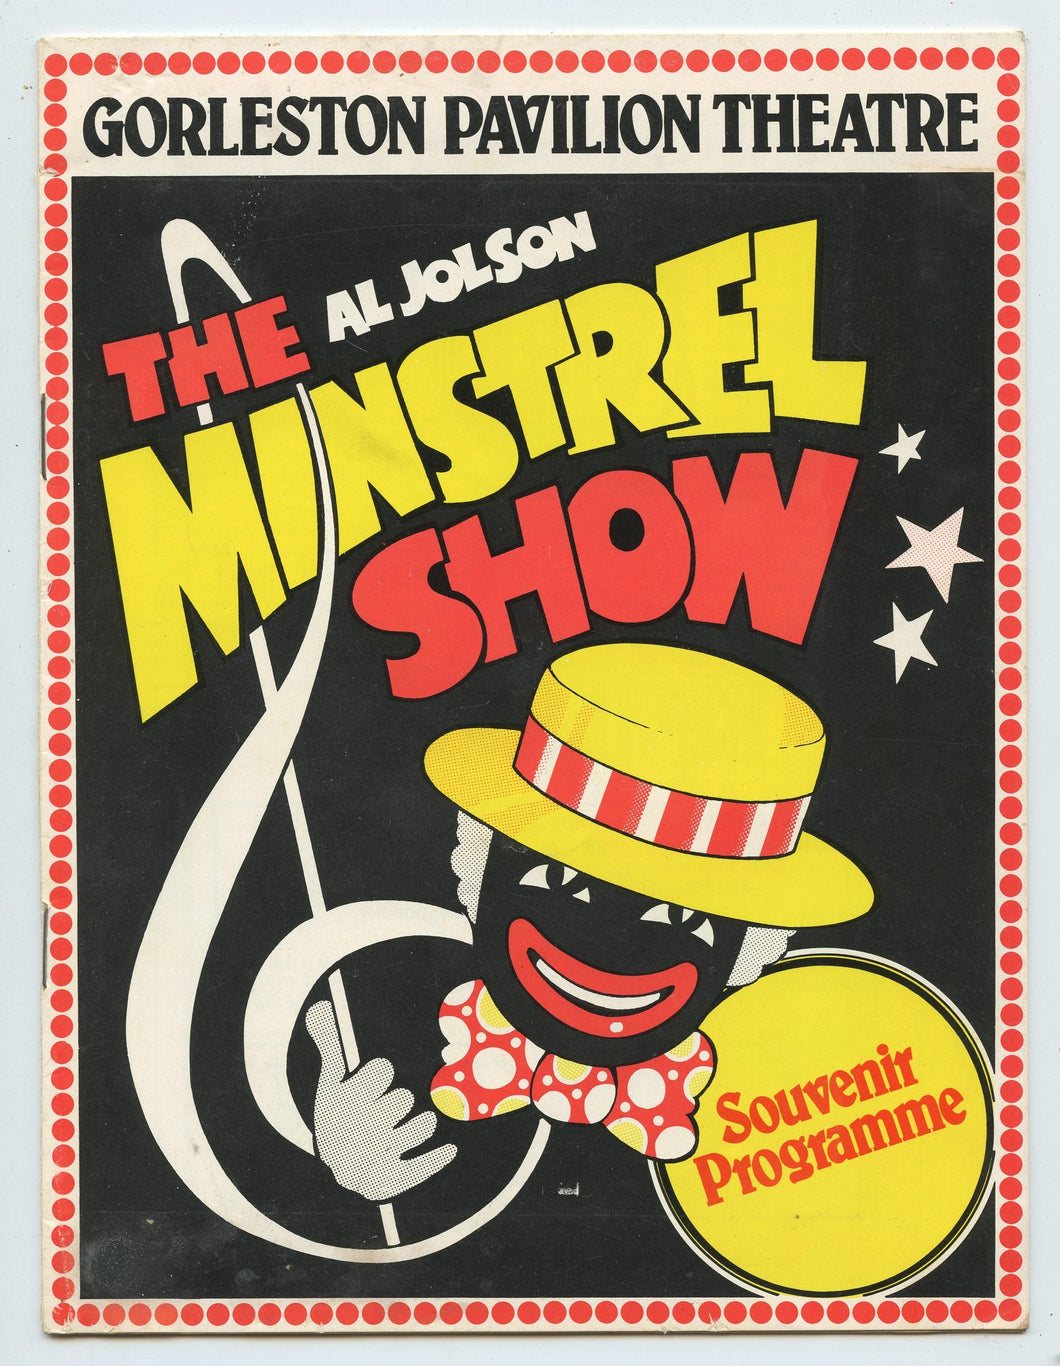 The Al Jolson Minstrel Show Souvenir Programme